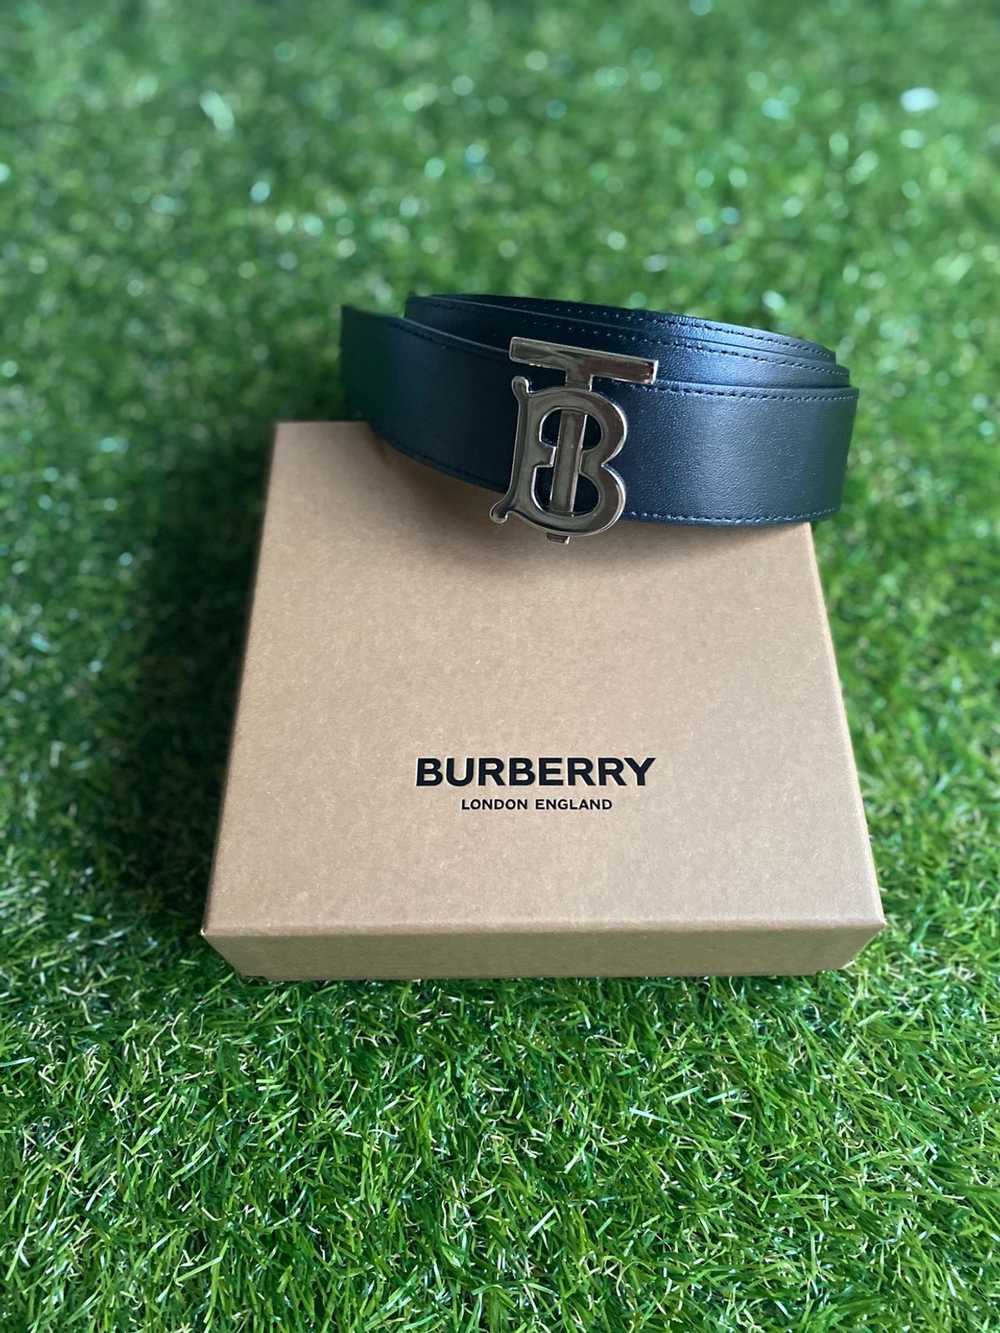 Burberry Burberry Belt - image 2